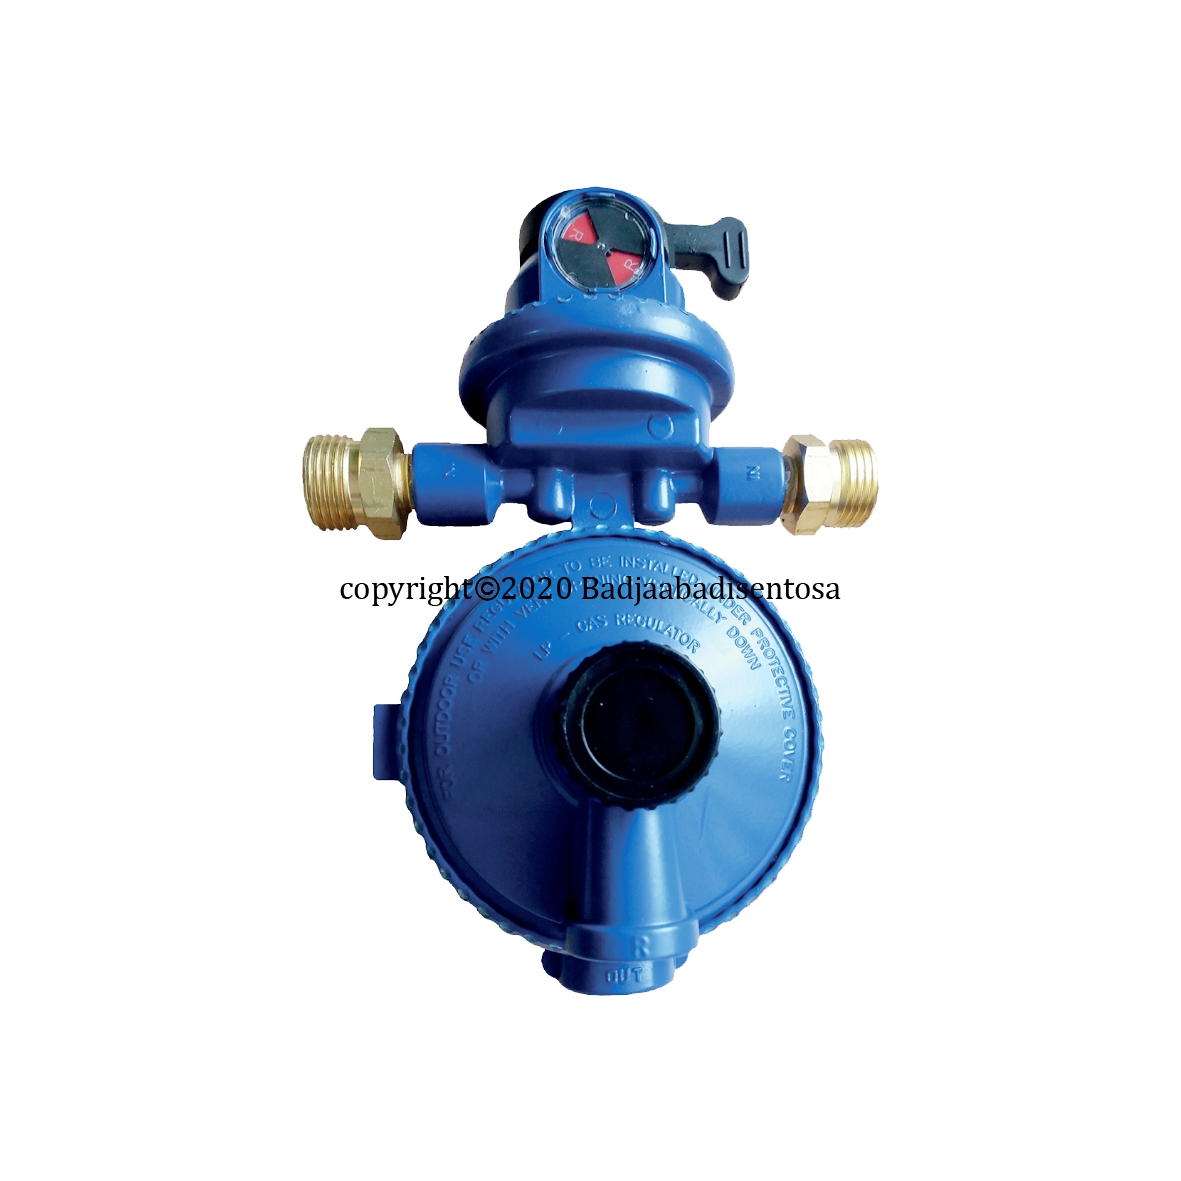 Rotarex - Industrial Gas Regulators - Automatic Changeover Regulator